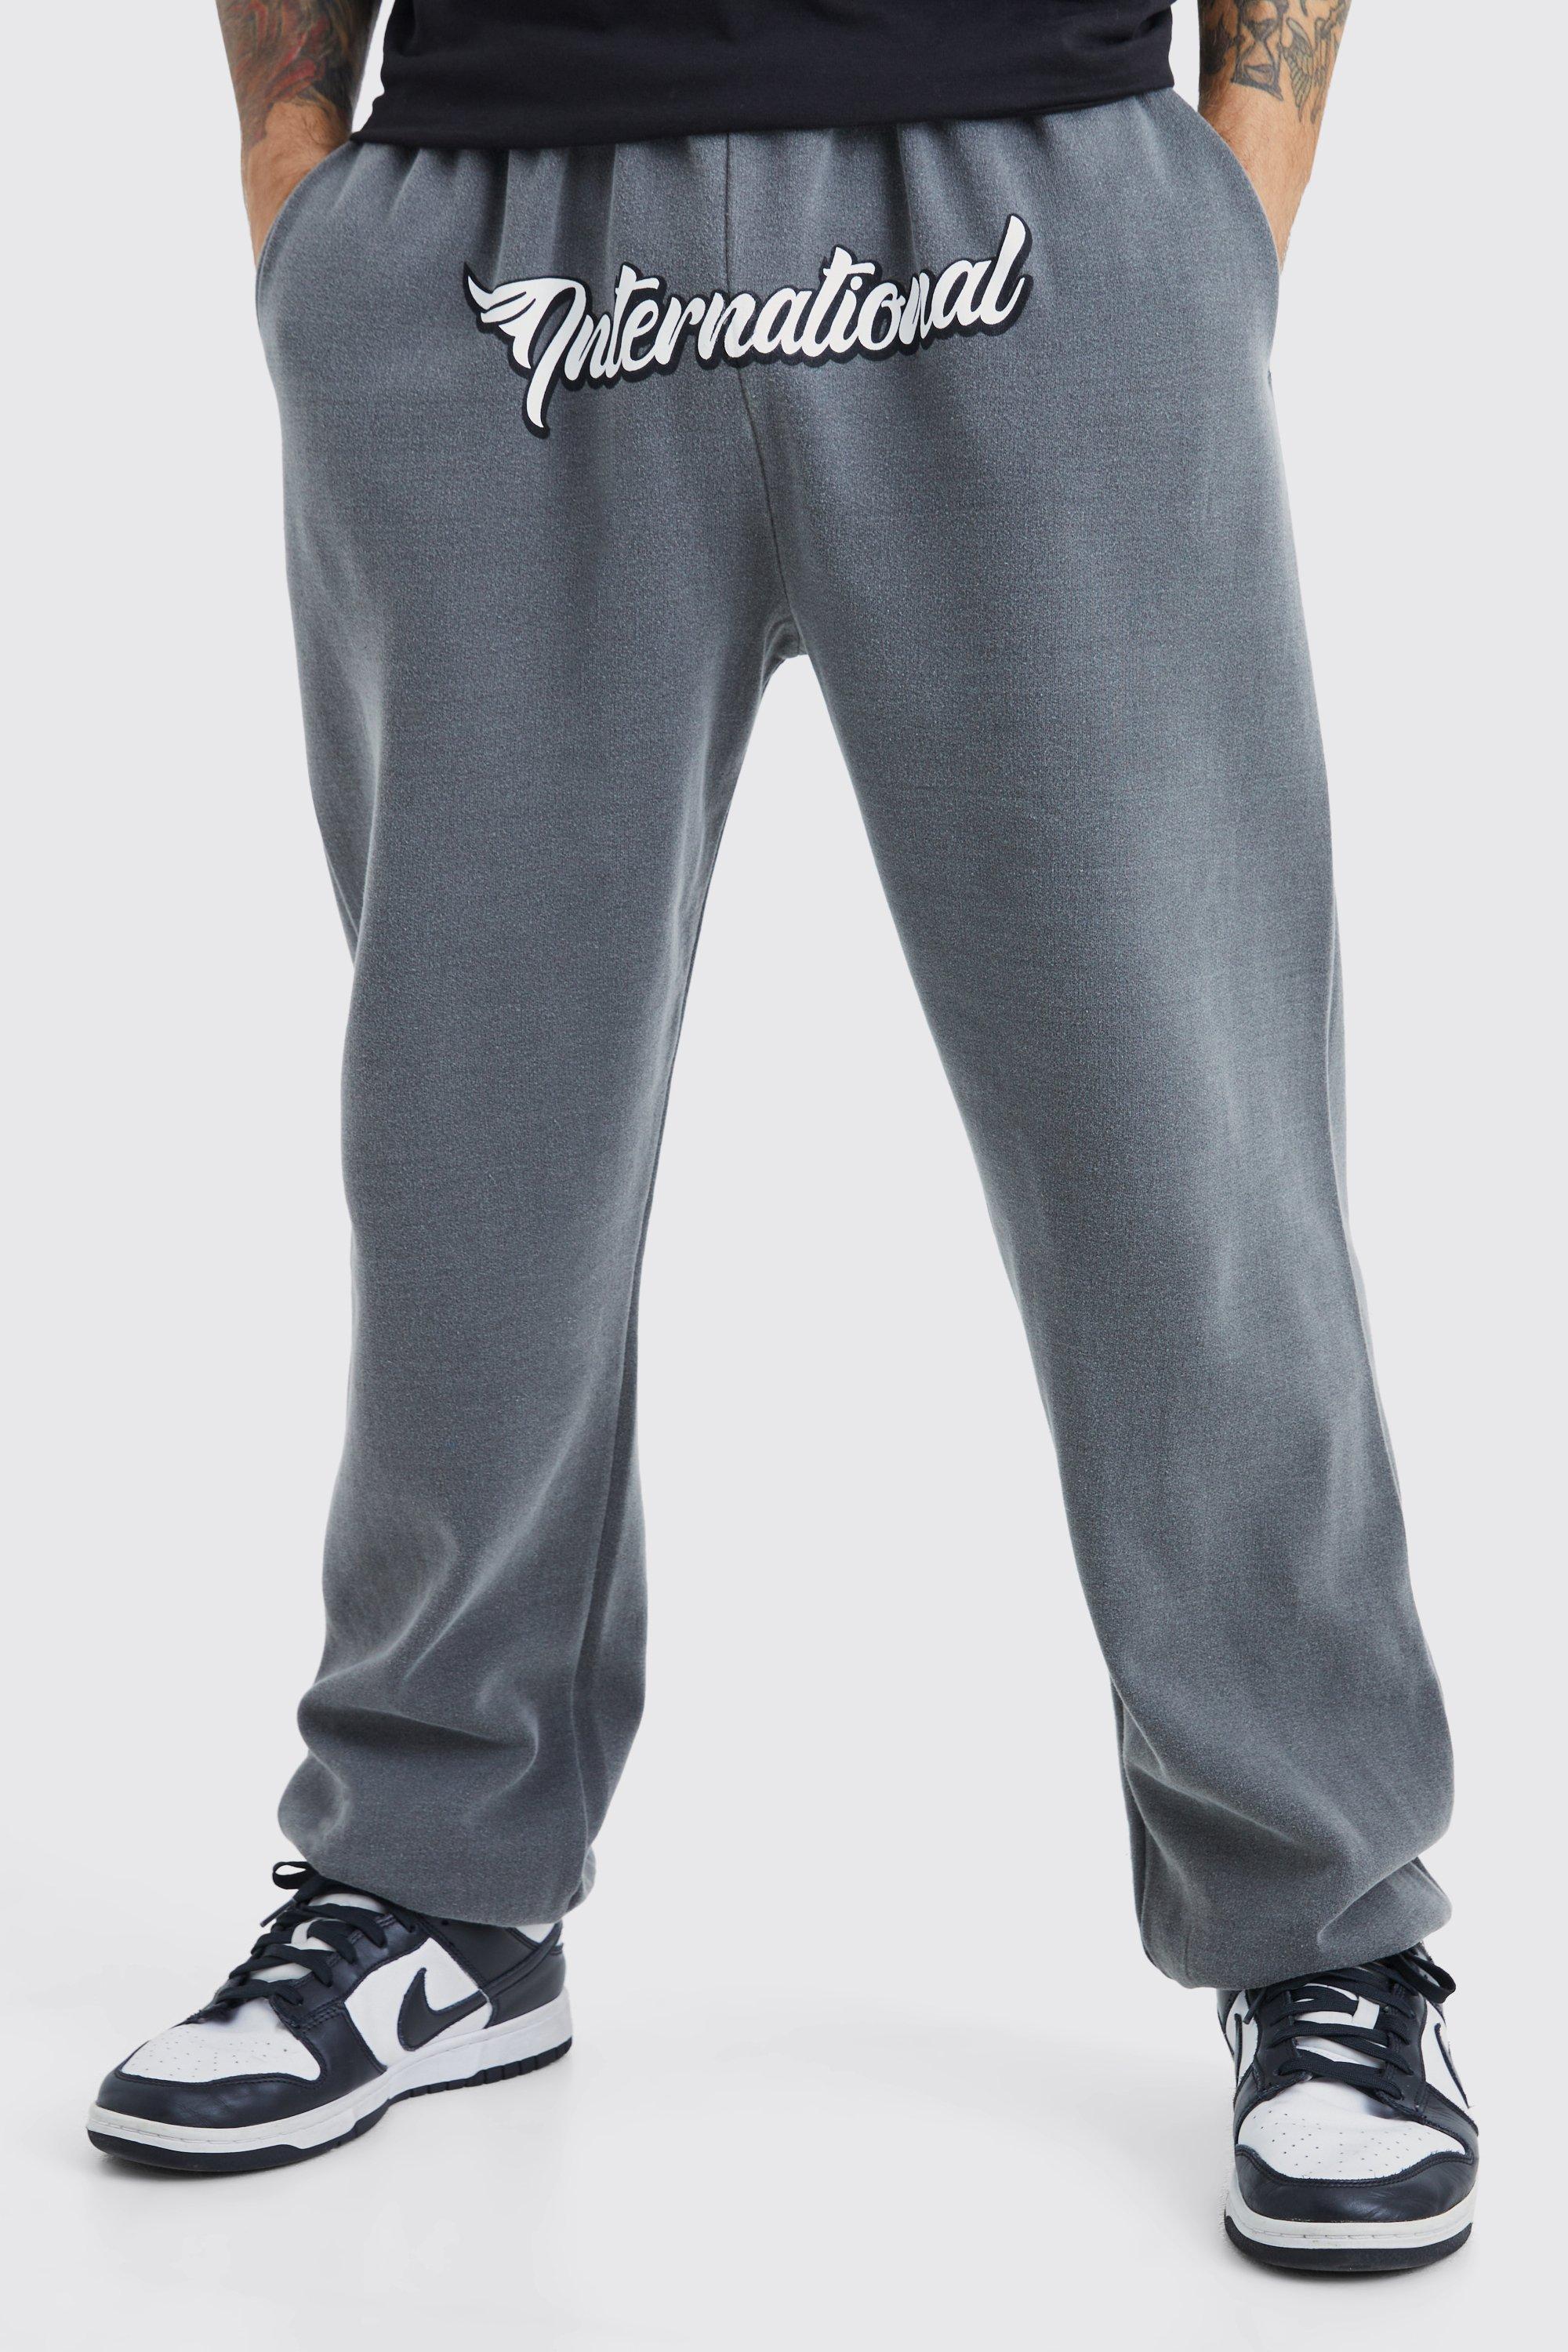 Mens Grey Oversized Worldwide Crotch Graphic Jogger, Grey